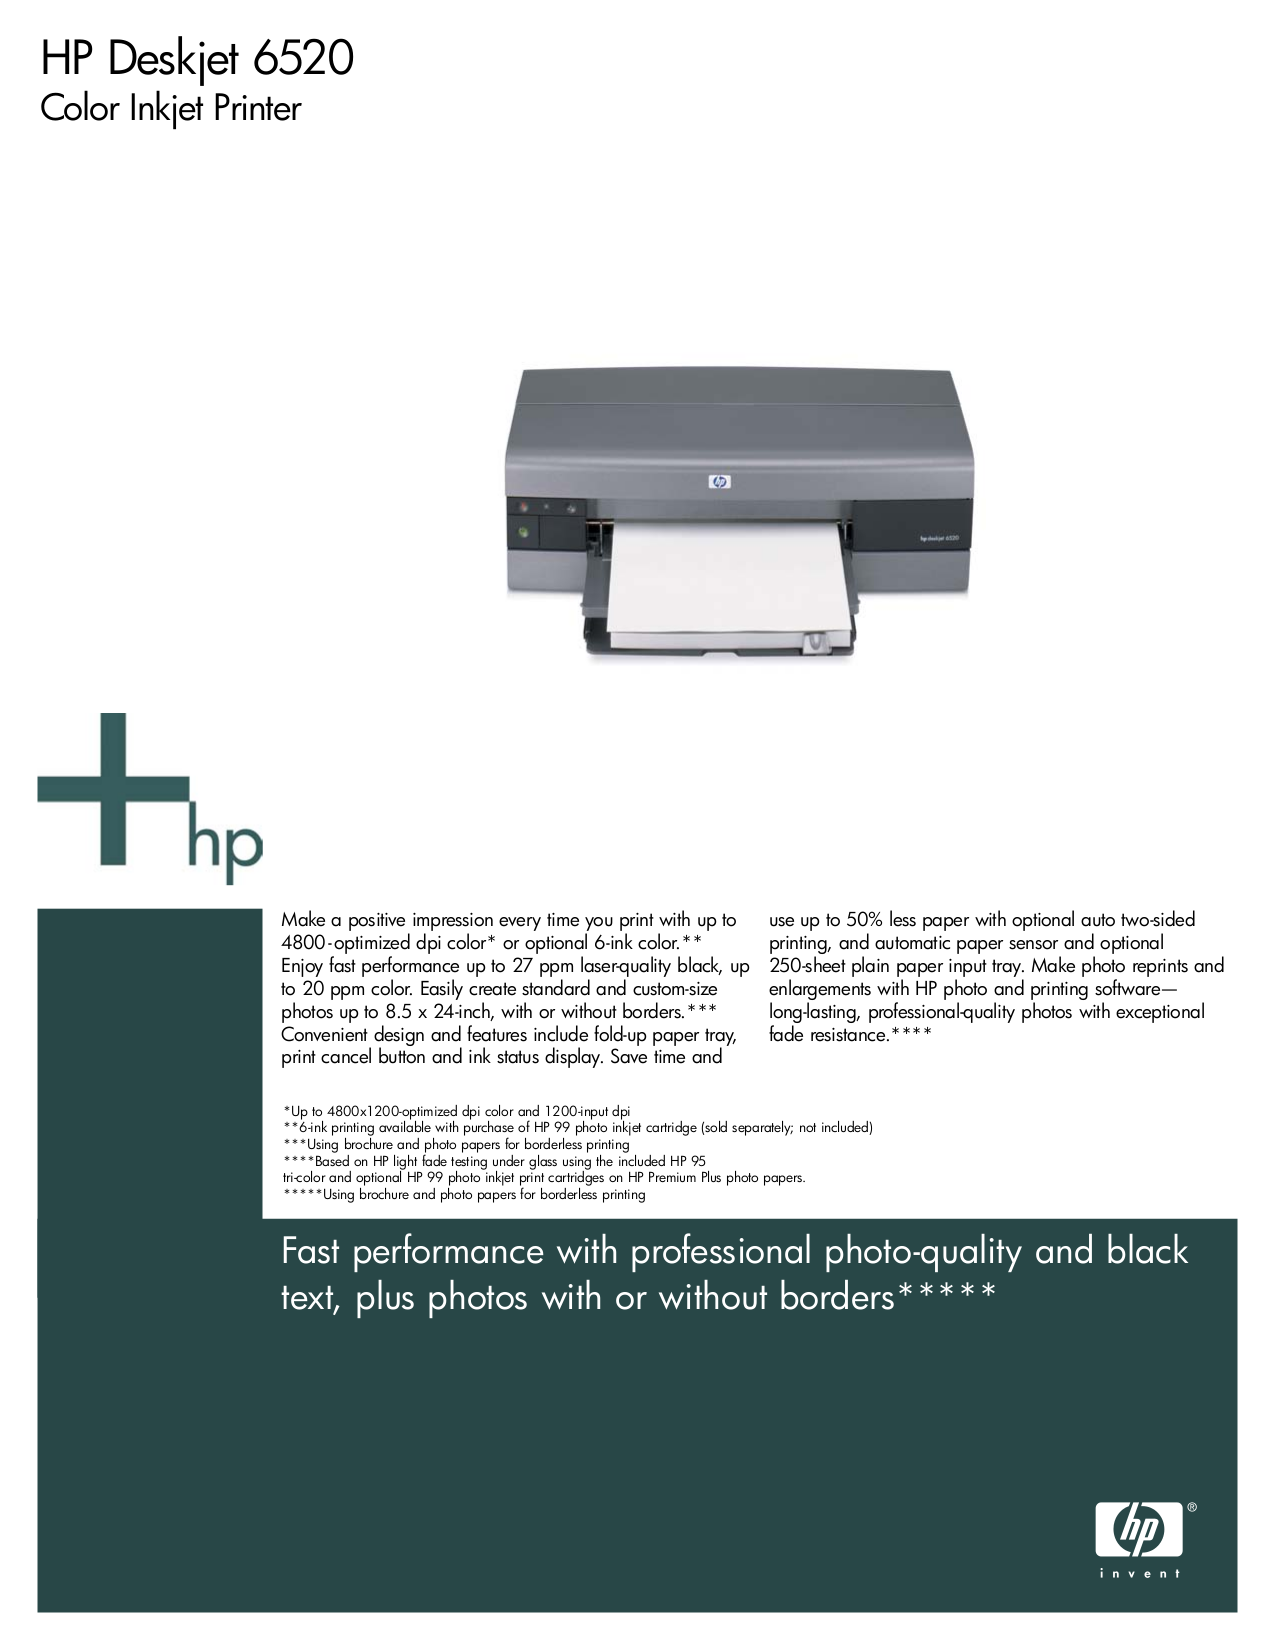 hp photosmart 7525 instruction manual